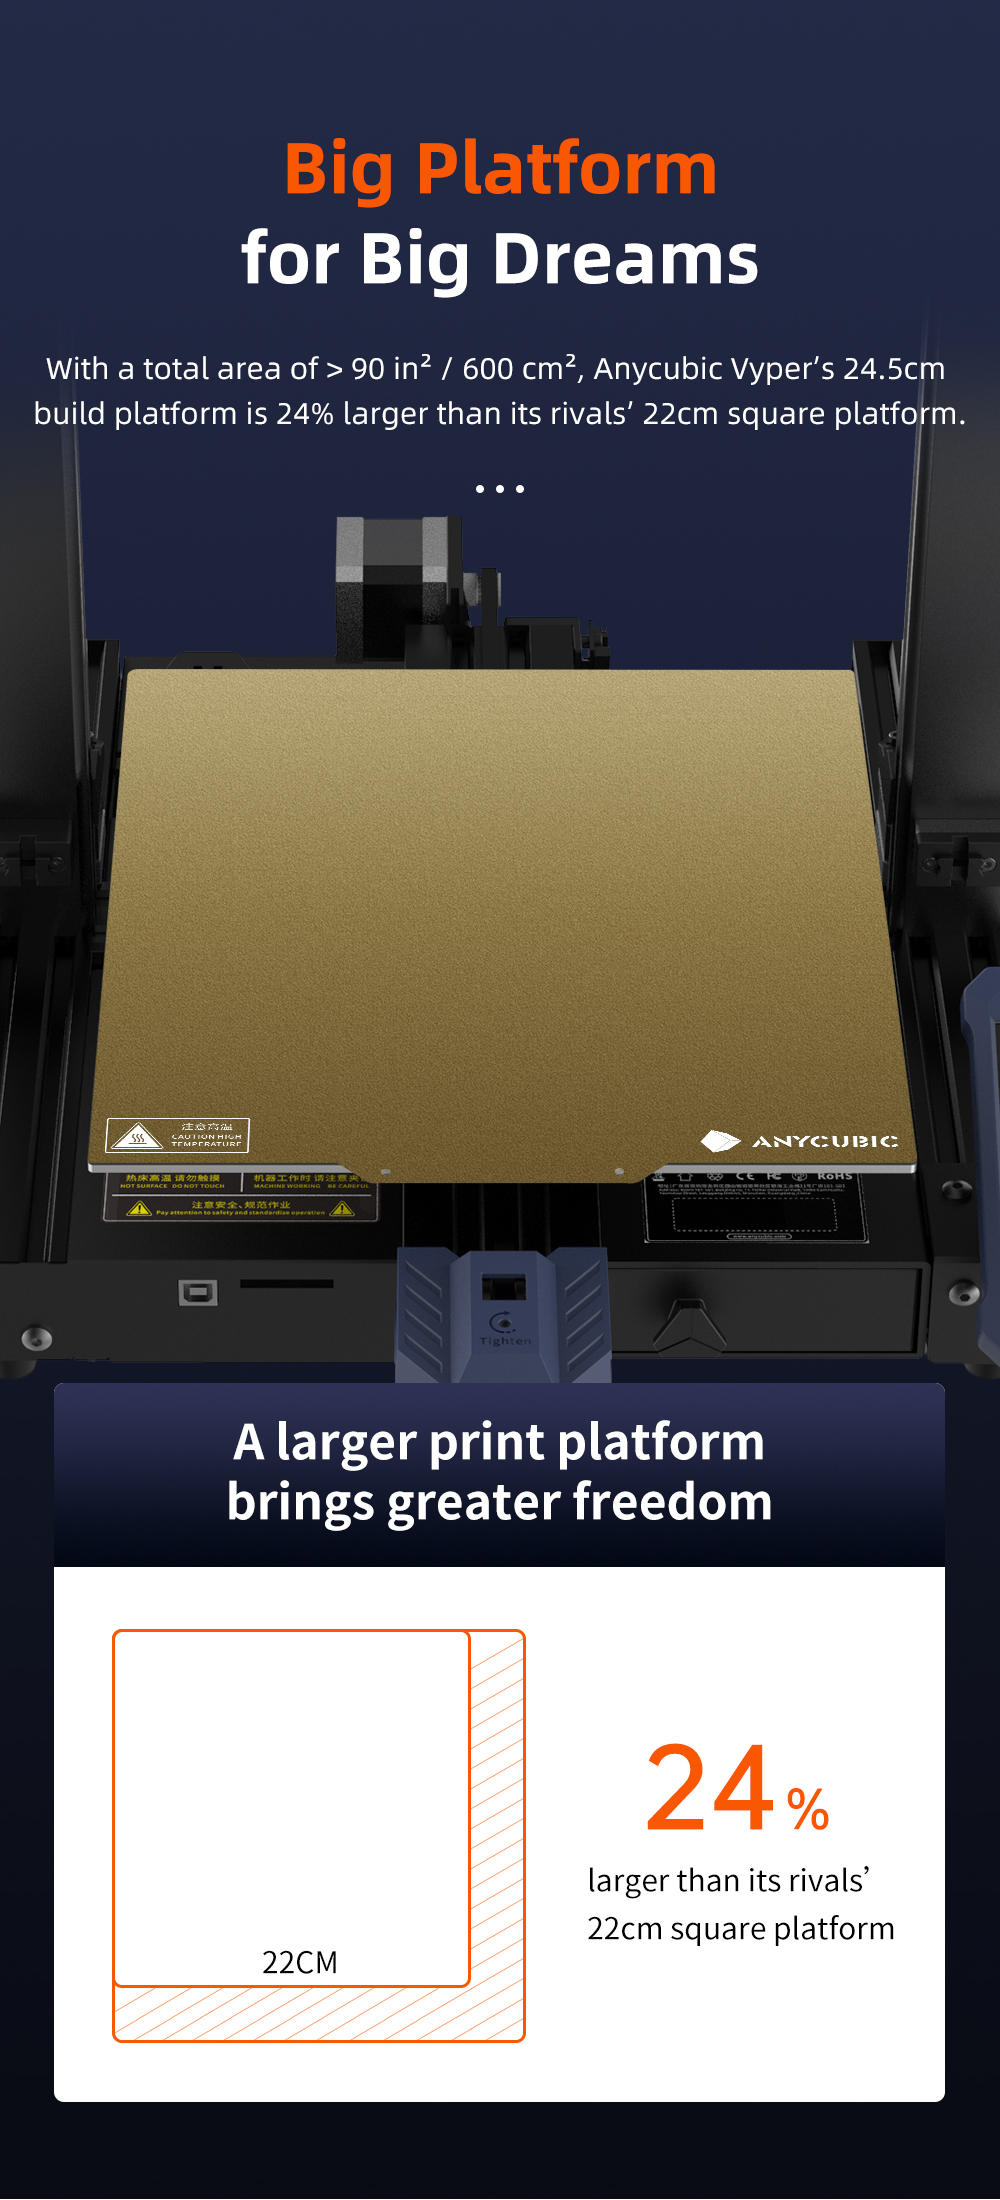 Stampante 3D ANYCUBIC Vyper la più recente stampante 3D FDM livellante automatica con stampanti 3D di dimensioni di stampa 245*245*260mm